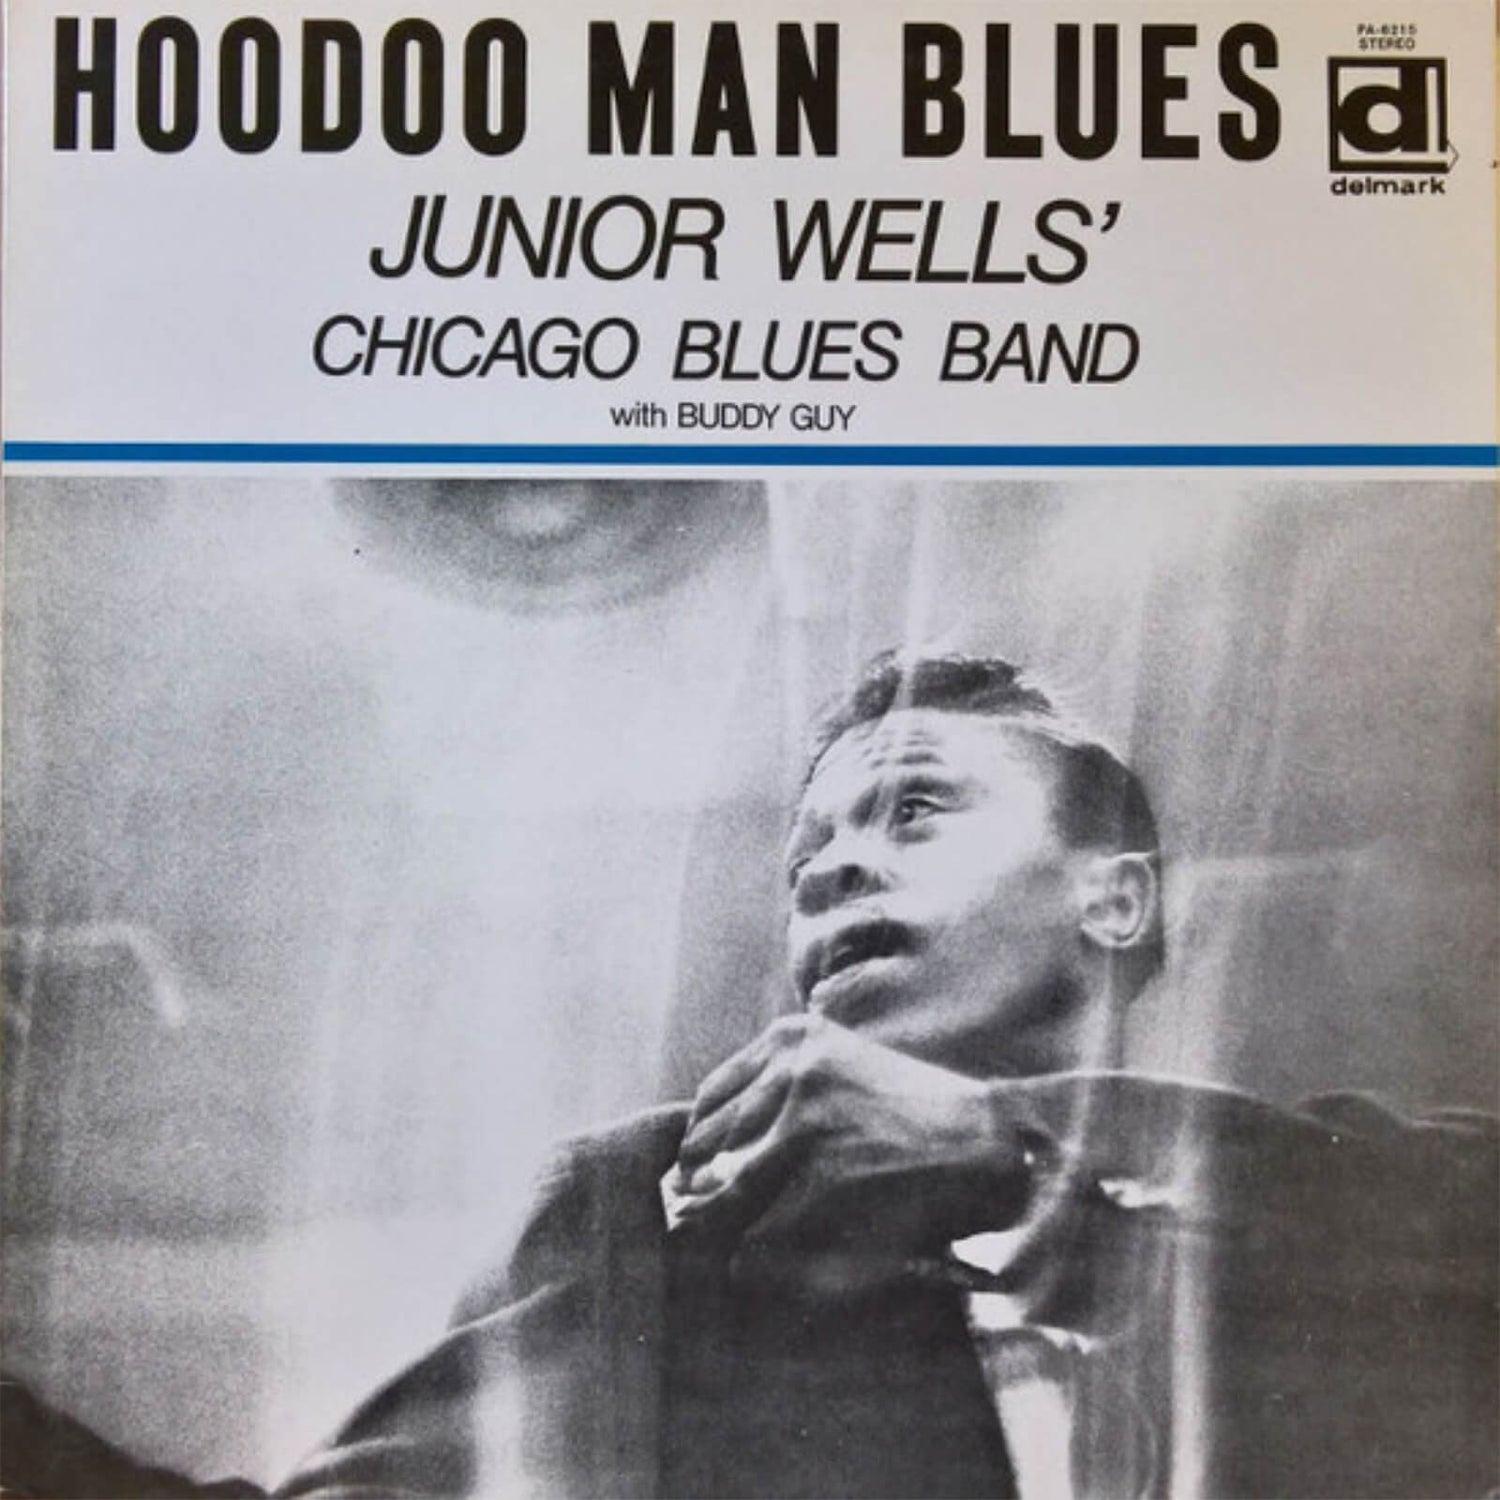 Junior Wells' Chicago Blues Band - Hoodoo Man Blues Vinyl